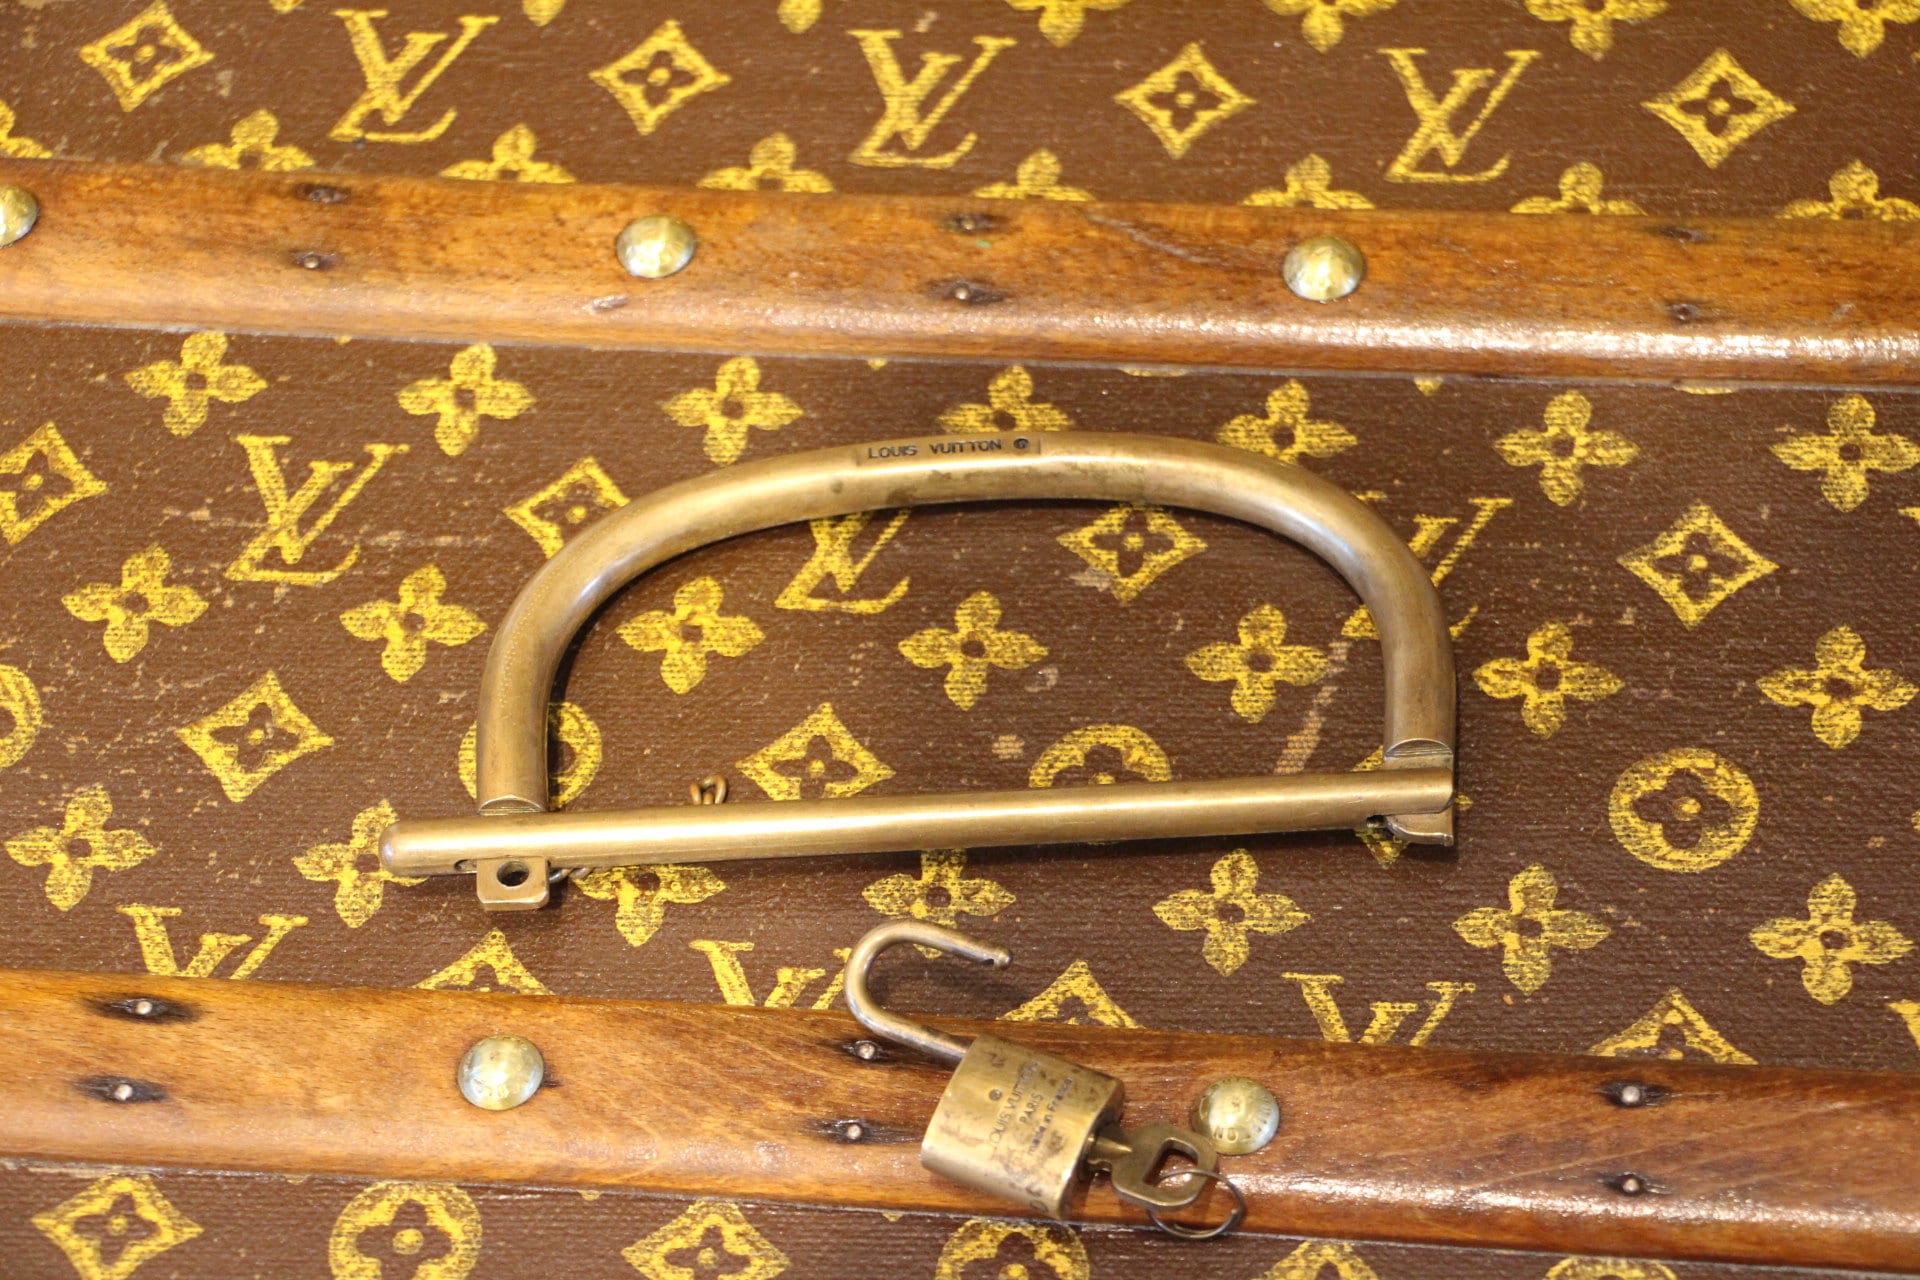 Large Vintage Louis Vuitton Sac Marin Xl Duffle Travel Bag